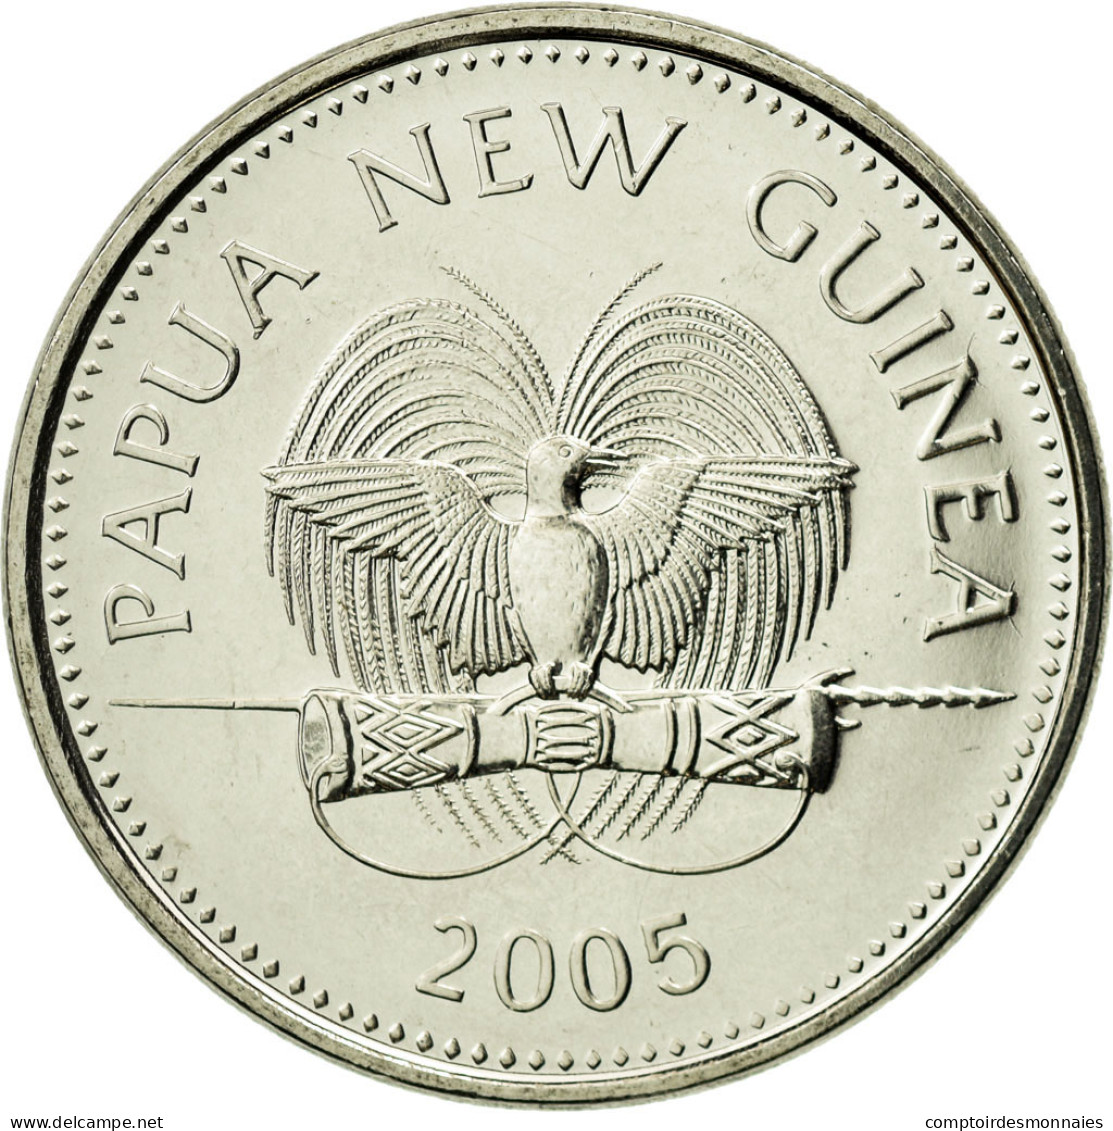 Monnaie, Papua New Guinea, 20 Toea, 2005, SPL, Nickel Plated Steel, KM:5a - Papua New Guinea